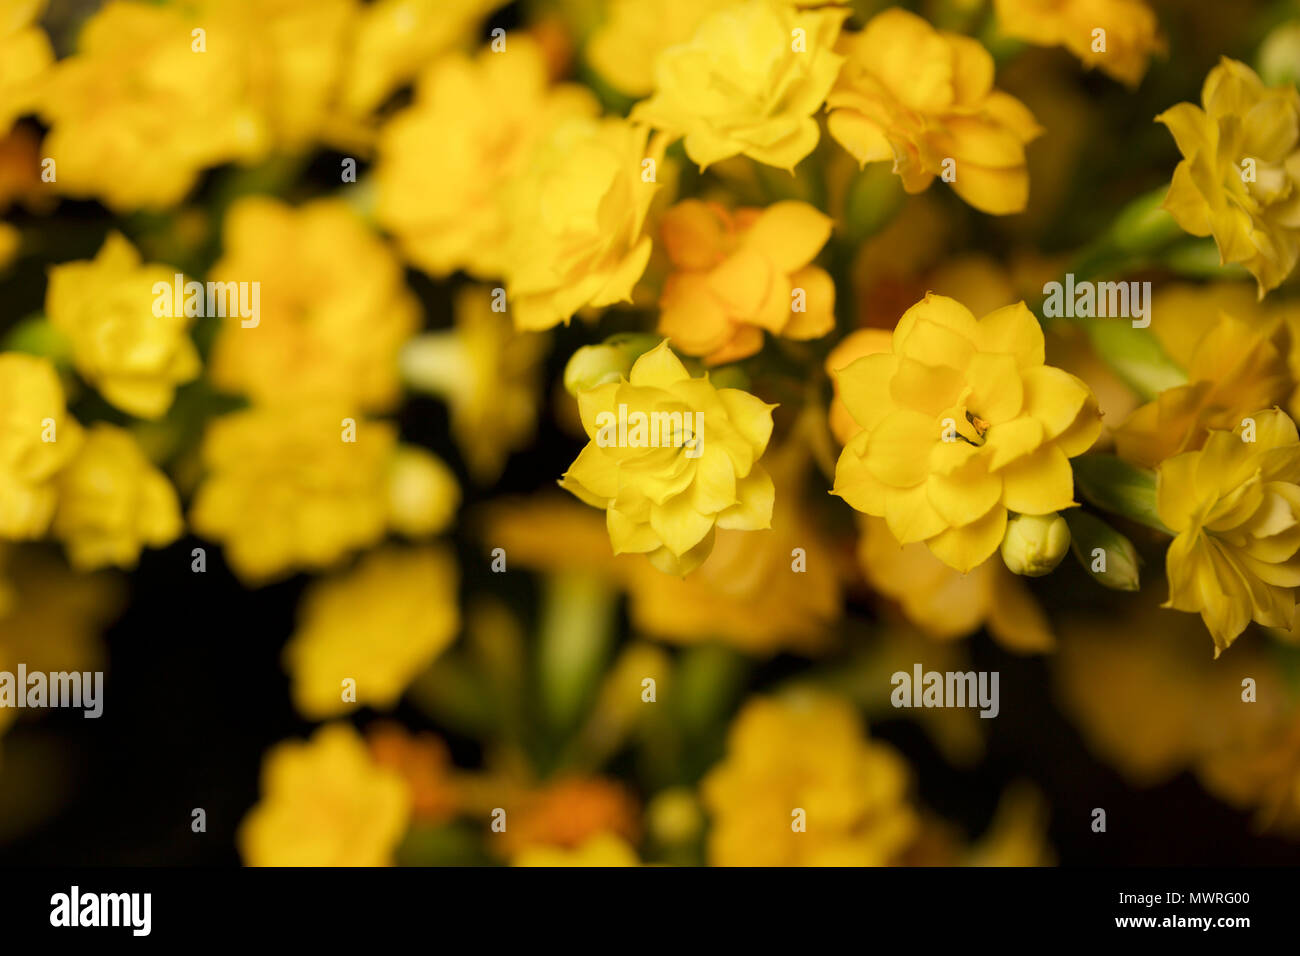 Macro view of yellow Calandiva (Kalanchoe) flowers with indoor lighting and dark background Stock Photo